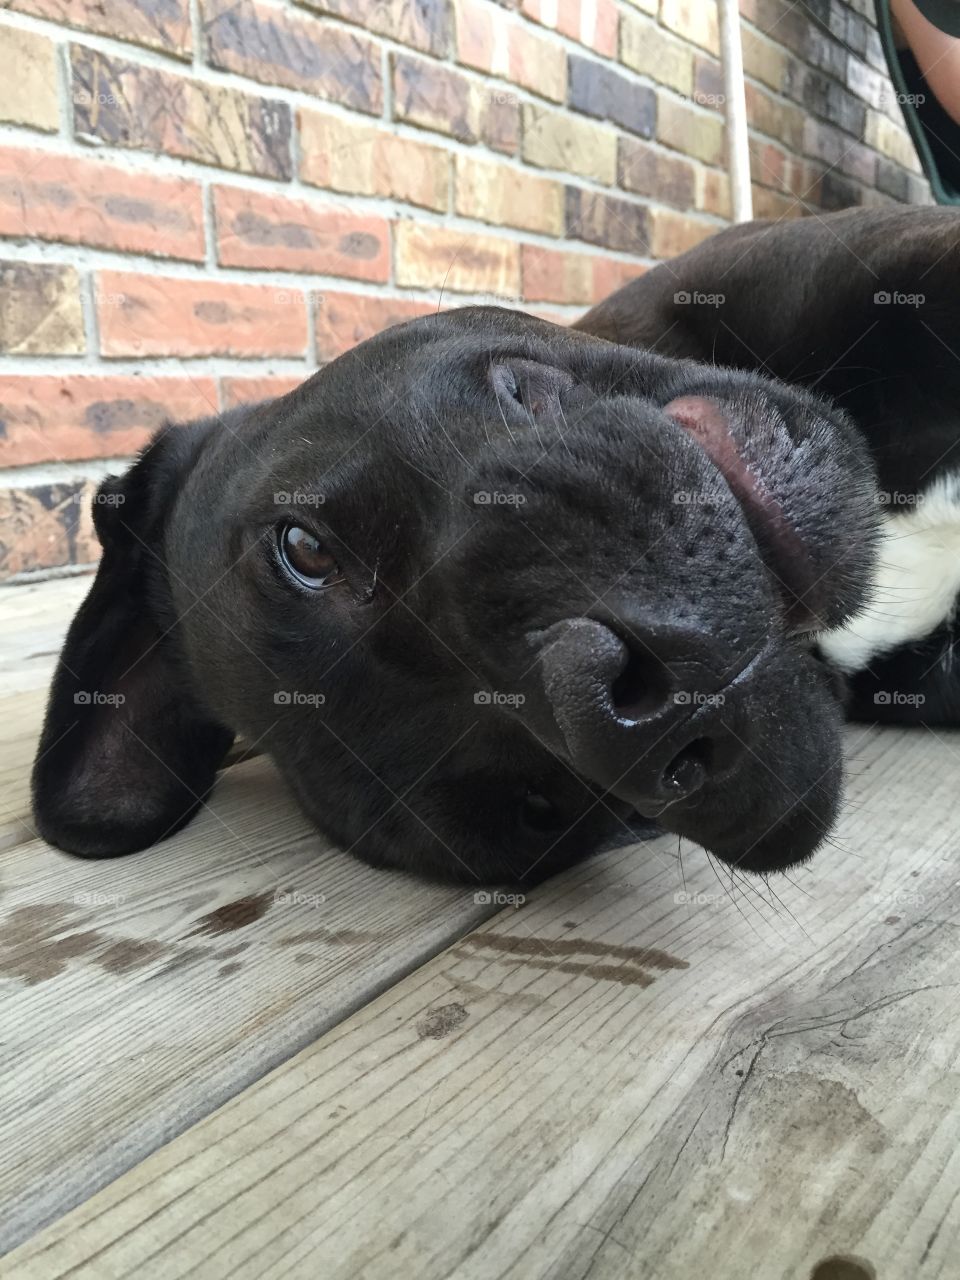 Goofy black dog. Black lab mix dog rolling on front porch